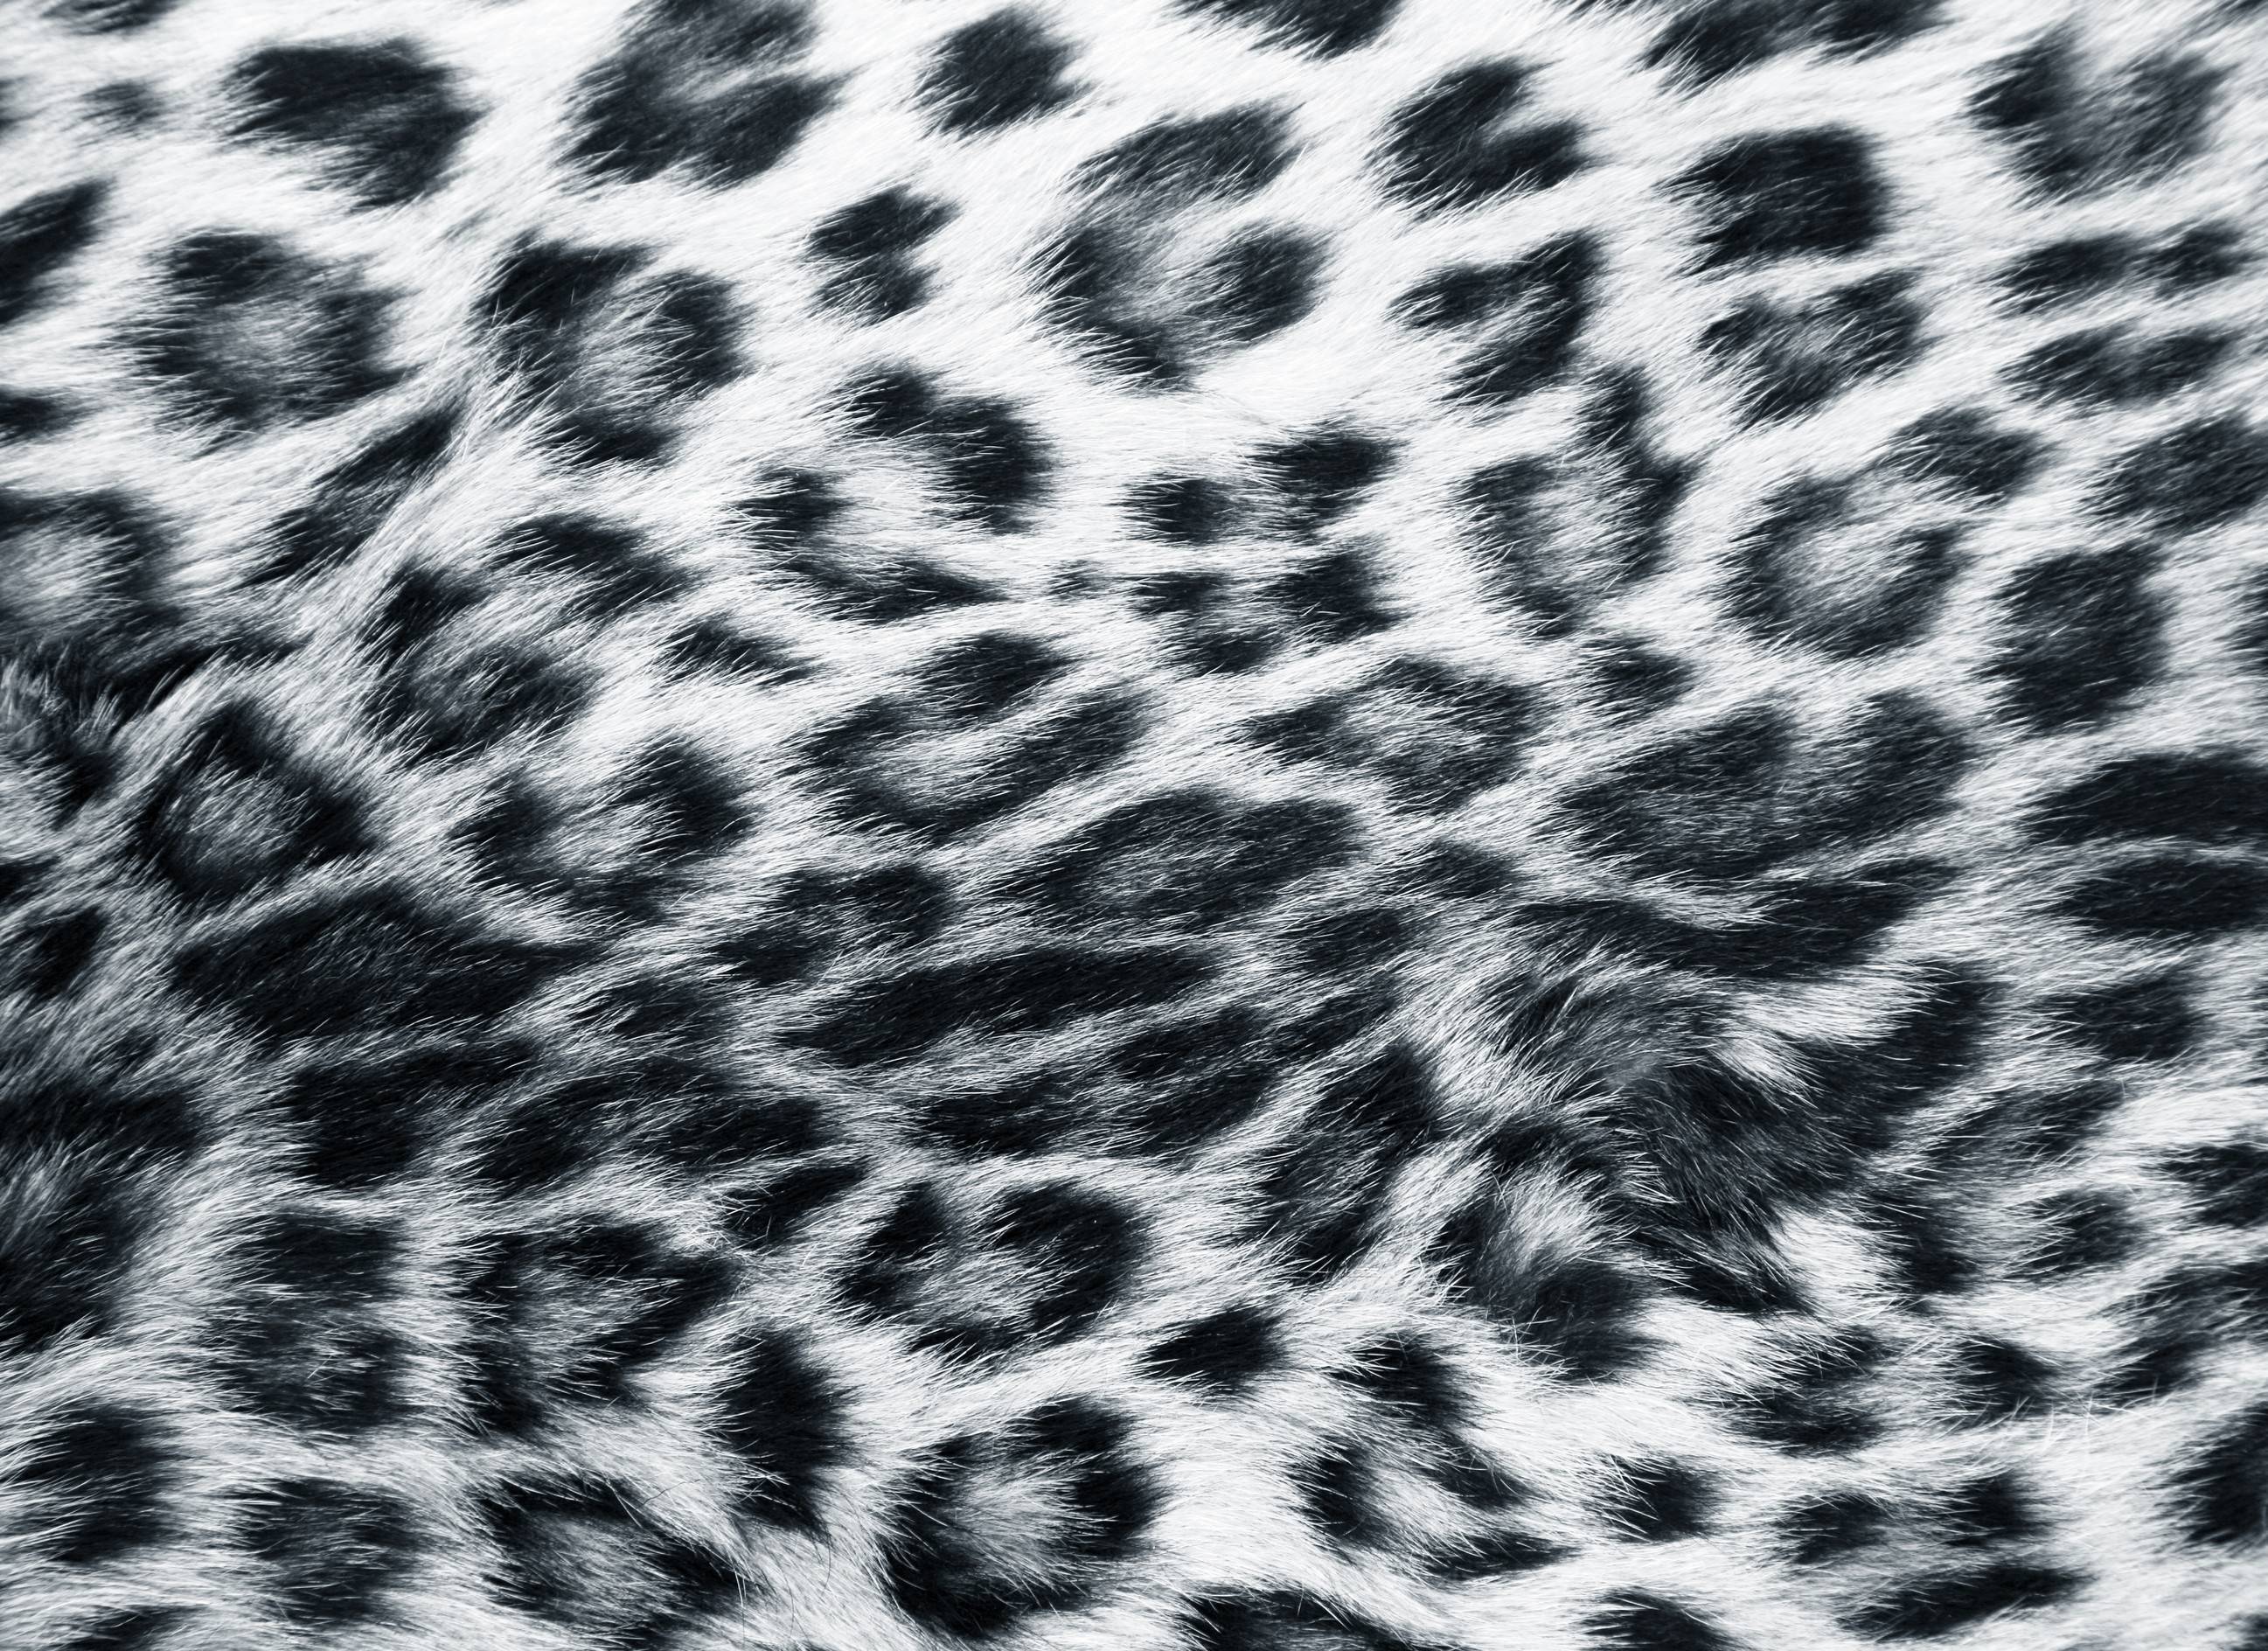 Snow Leopard Wallpaper 26 282598 Image HD Wallpaper. Wallfoy.com